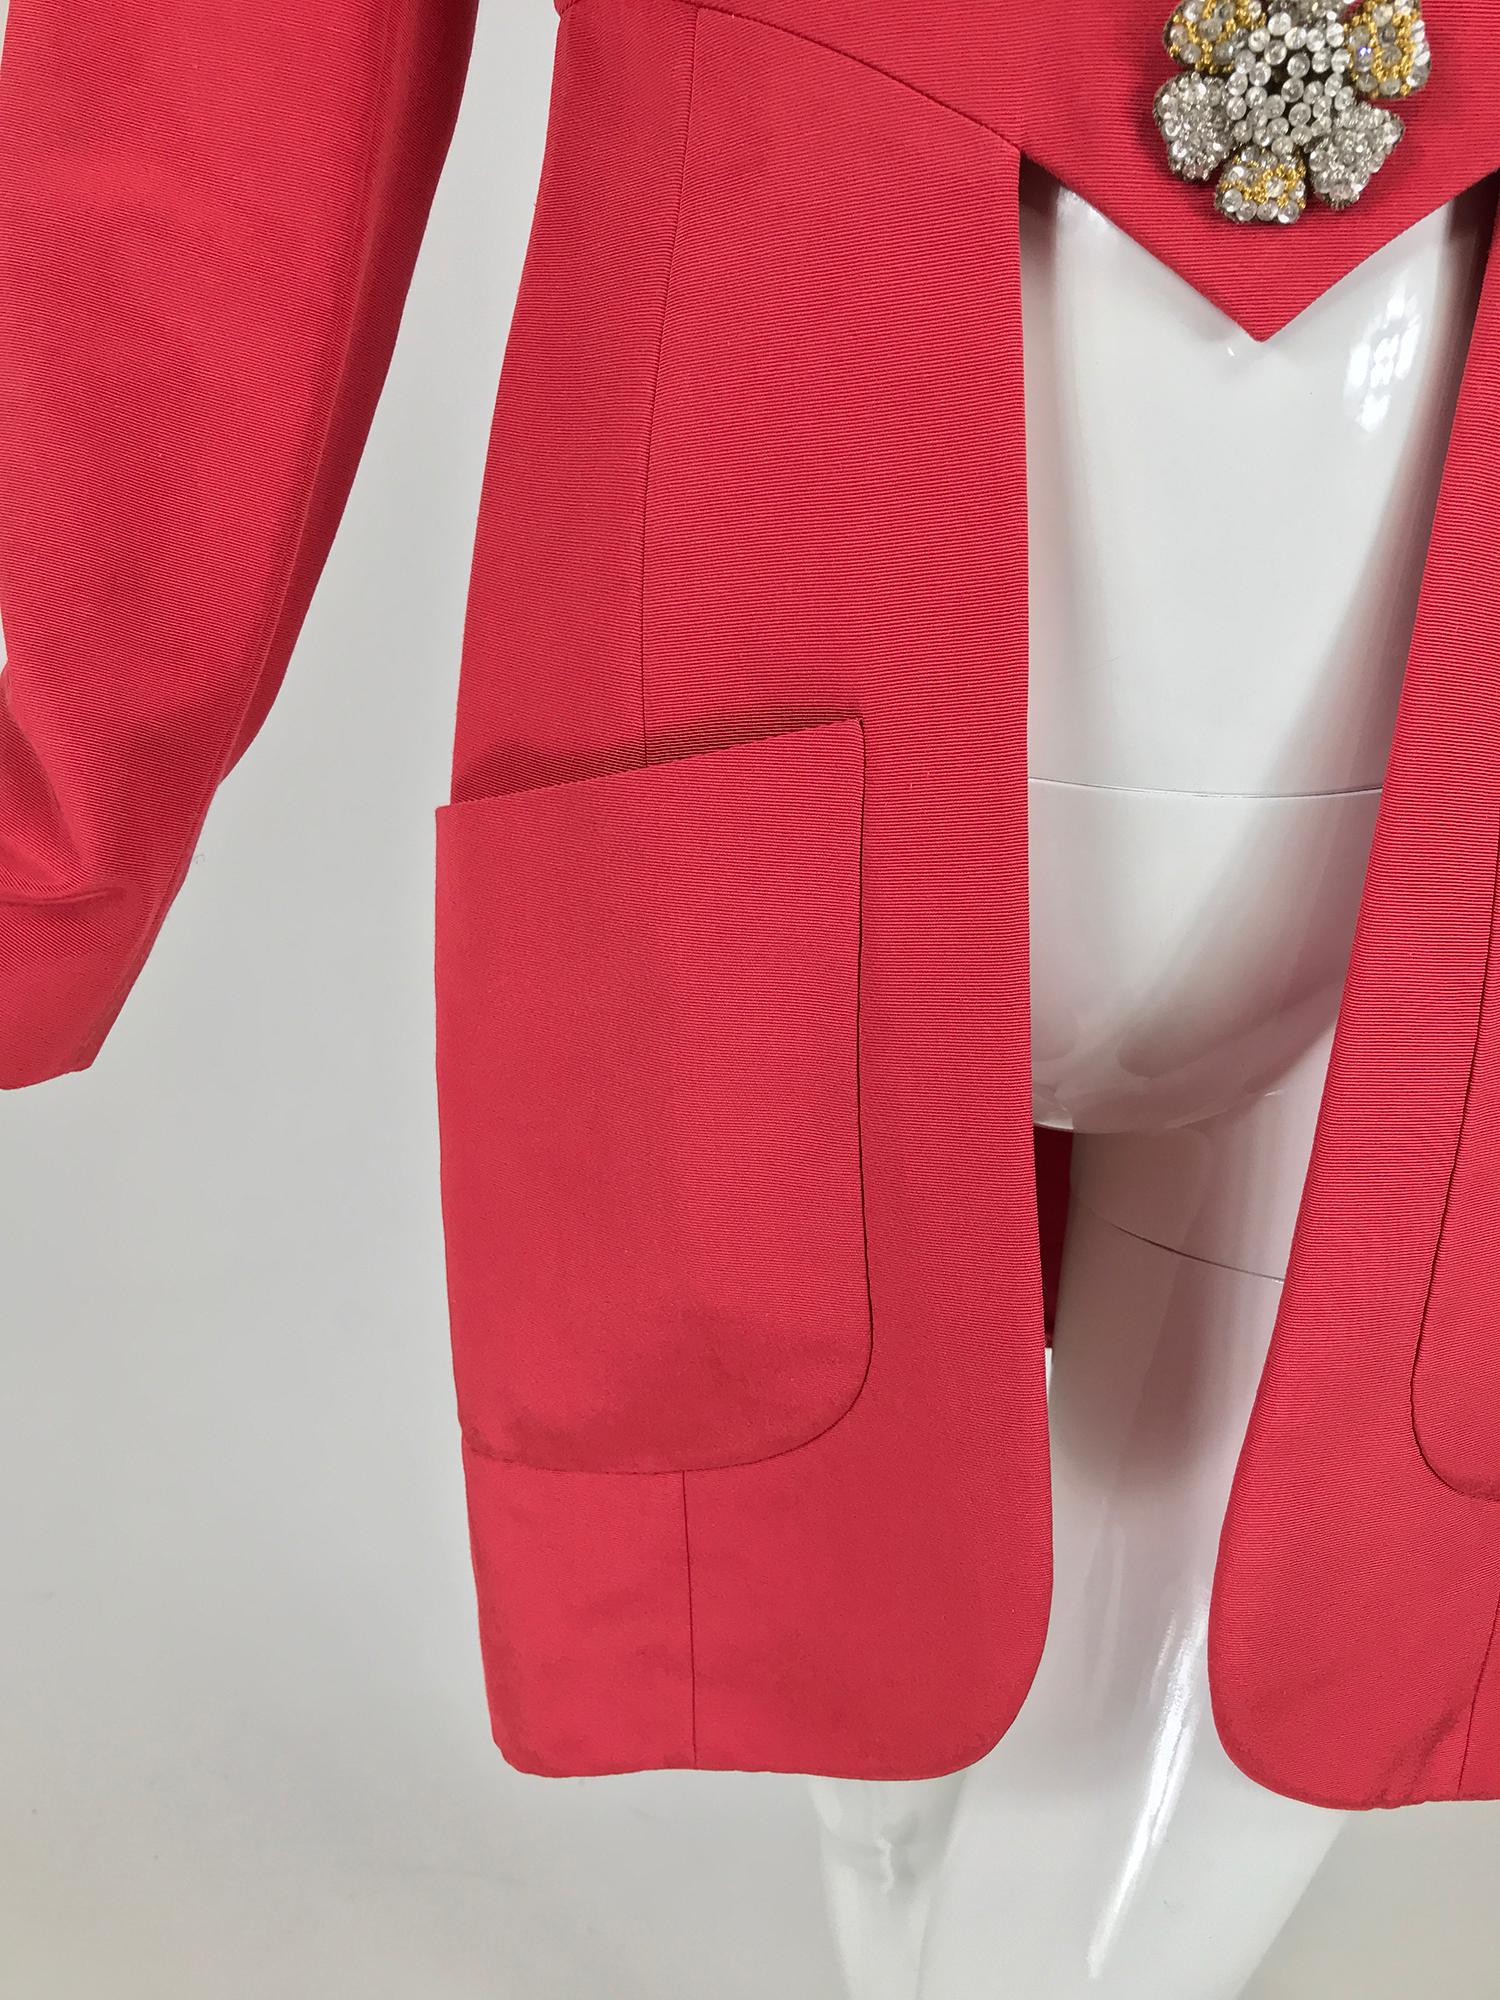 Karl Lagerfeld Coral Red Silk Faille Reddingote Style Coat 1990s 5